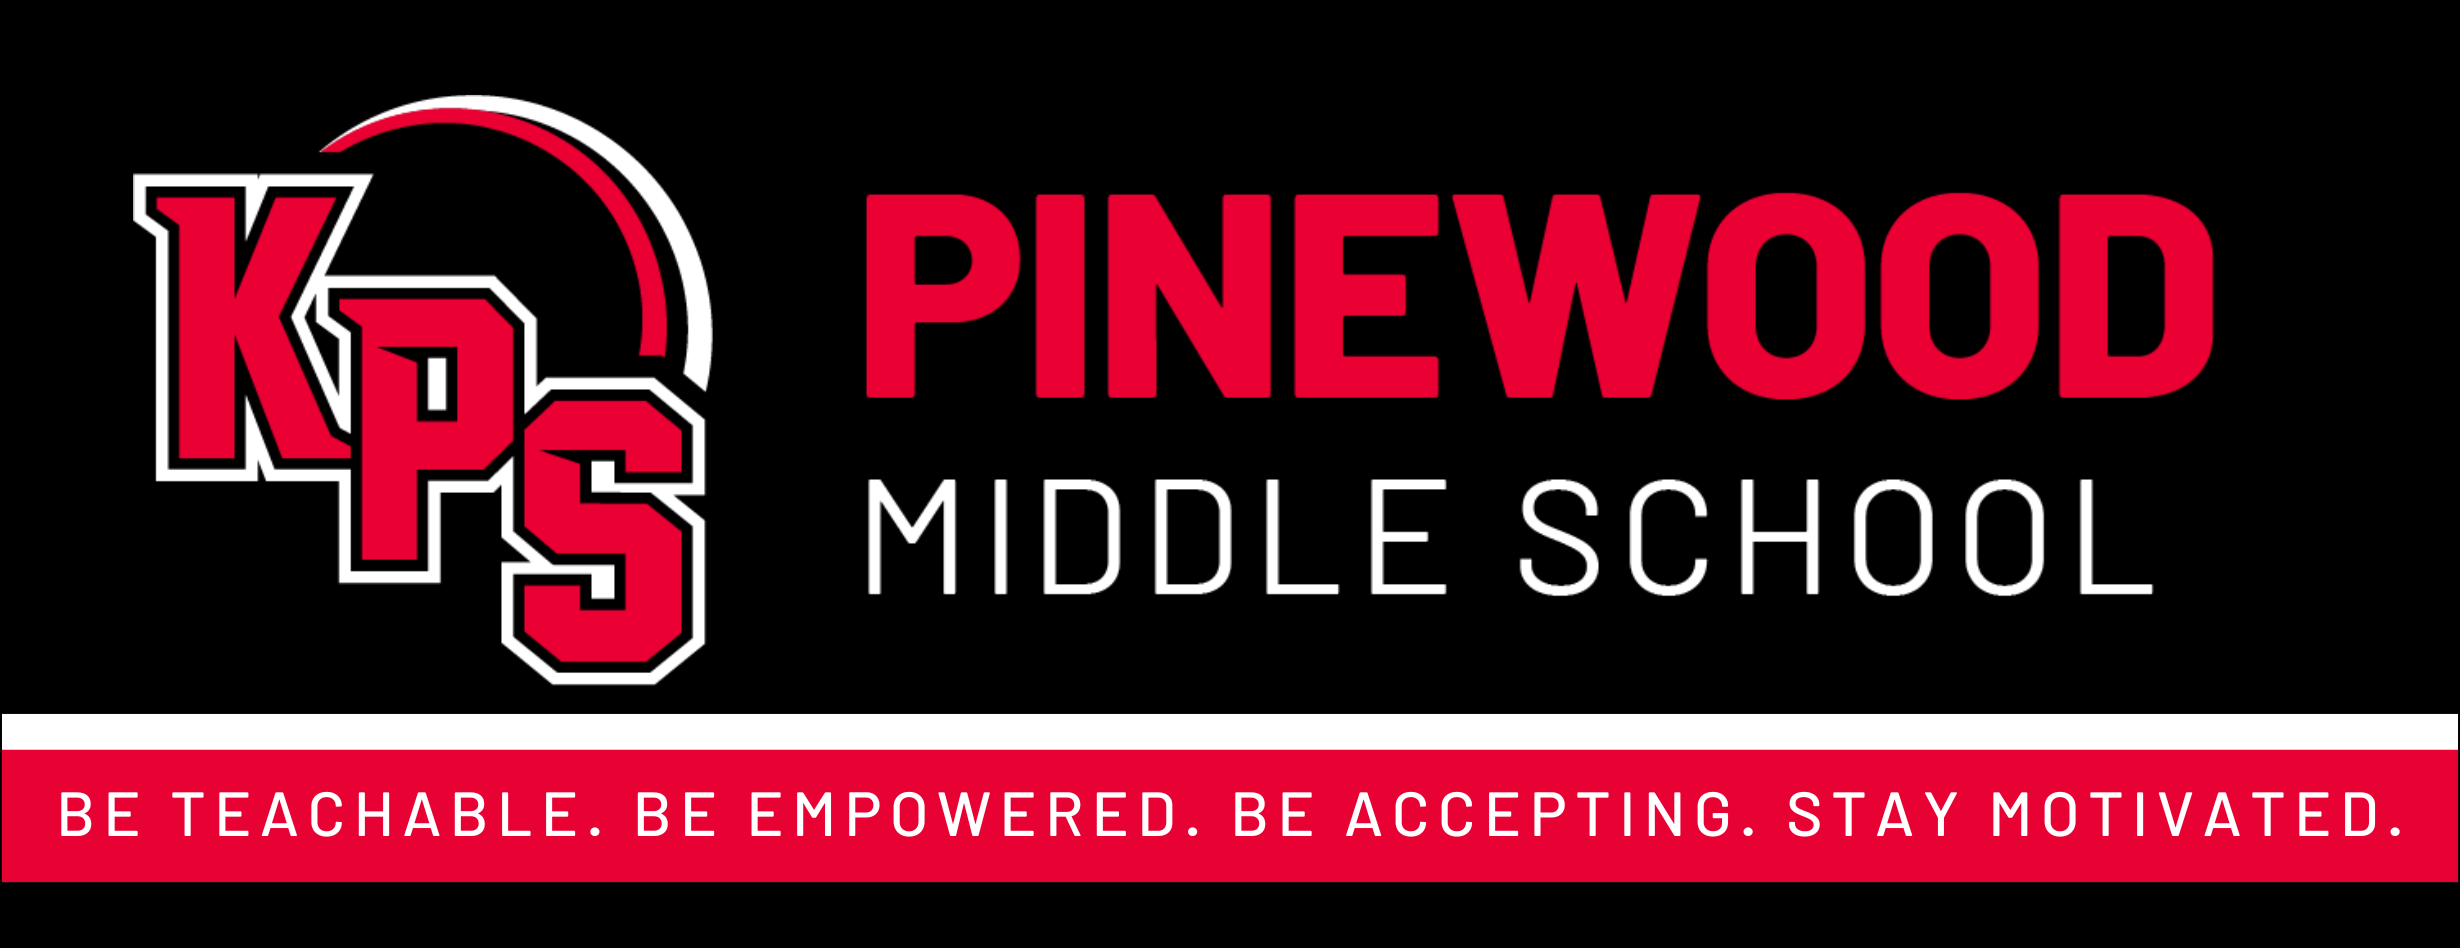 KPS pinewood logo